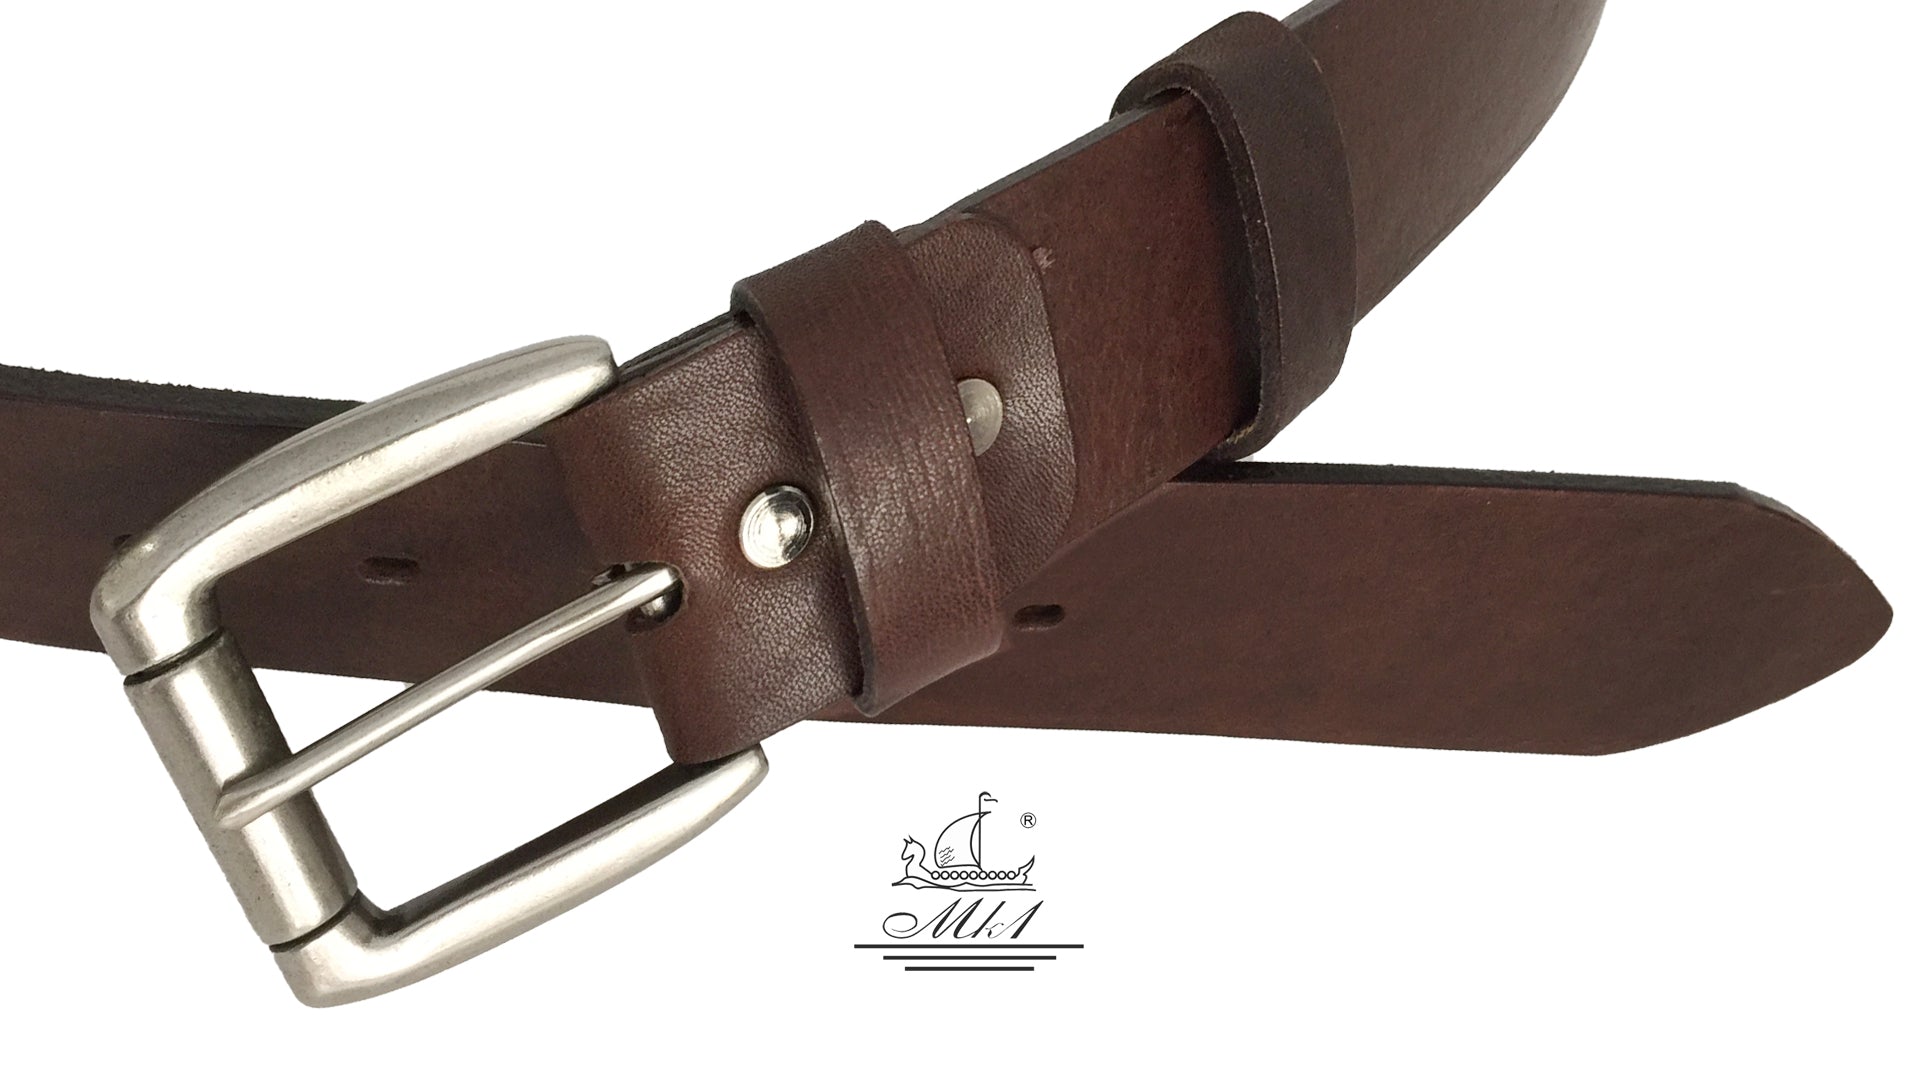 2240k-gf Hand made  leather belt